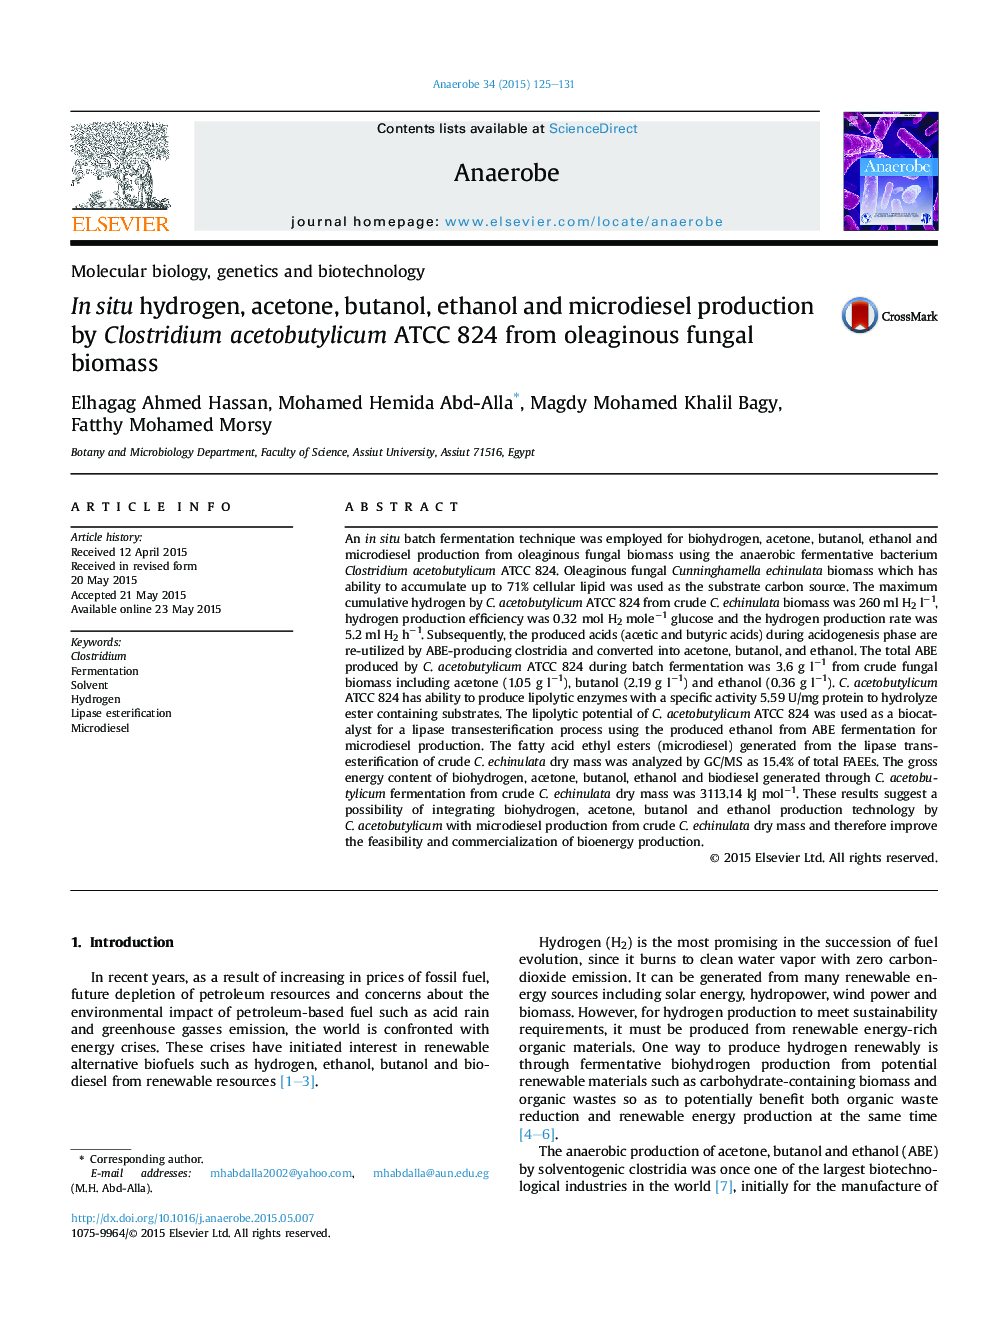 In situ hydrogen, acetone, butanol, ethanol and microdiesel production by Clostridium acetobutylicum ATCC 824 from oleaginous fungal biomass